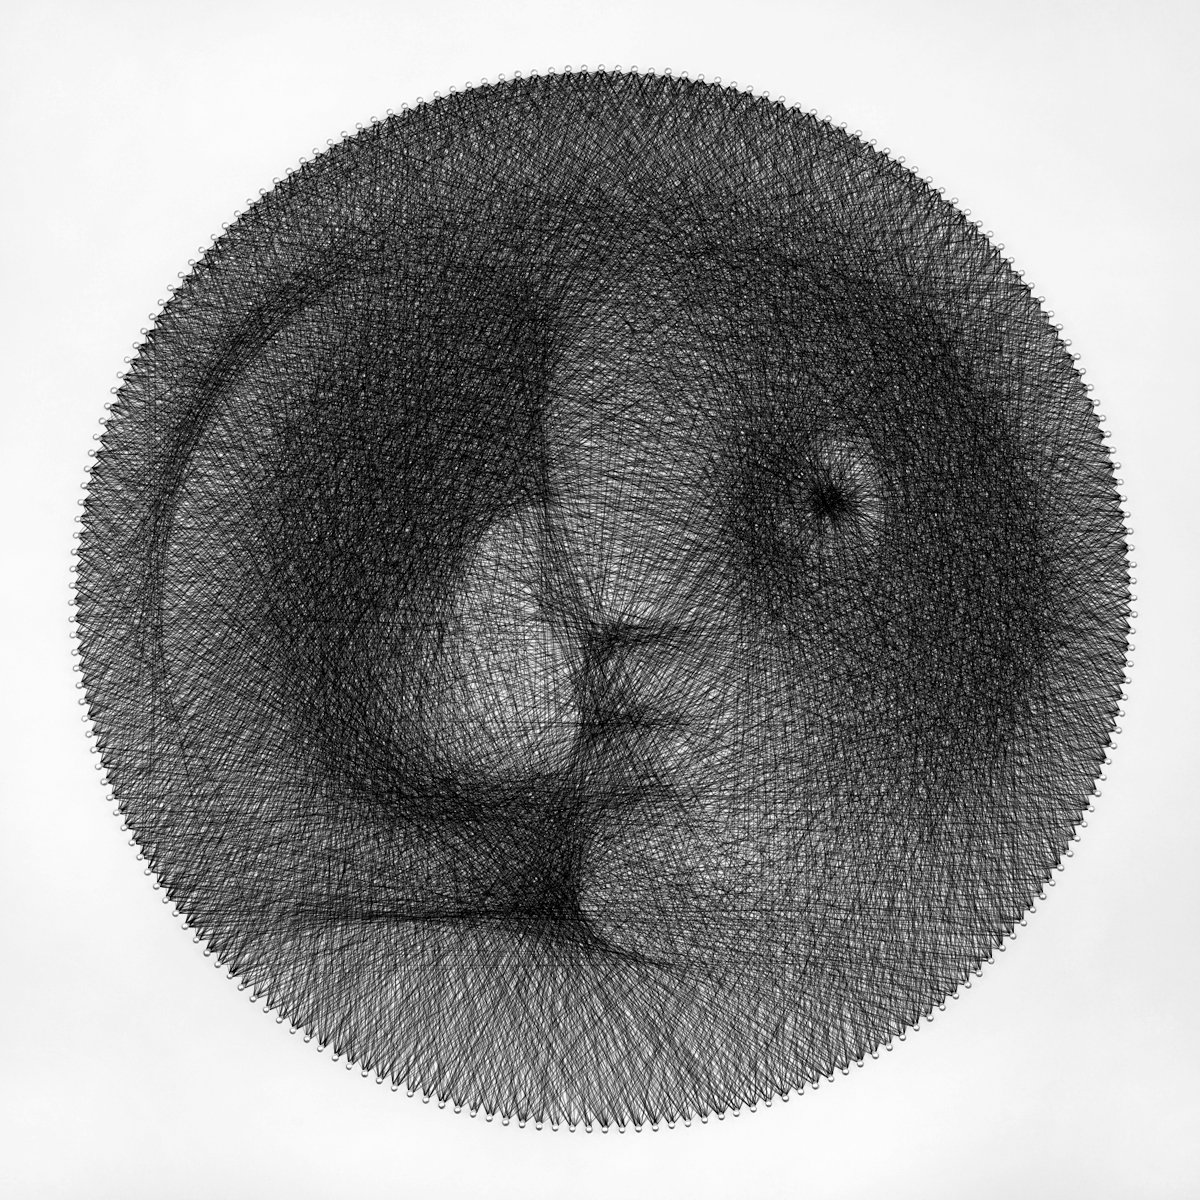 Face Anthropomorphic Volume String Art Sculpture by Andrey Saharov